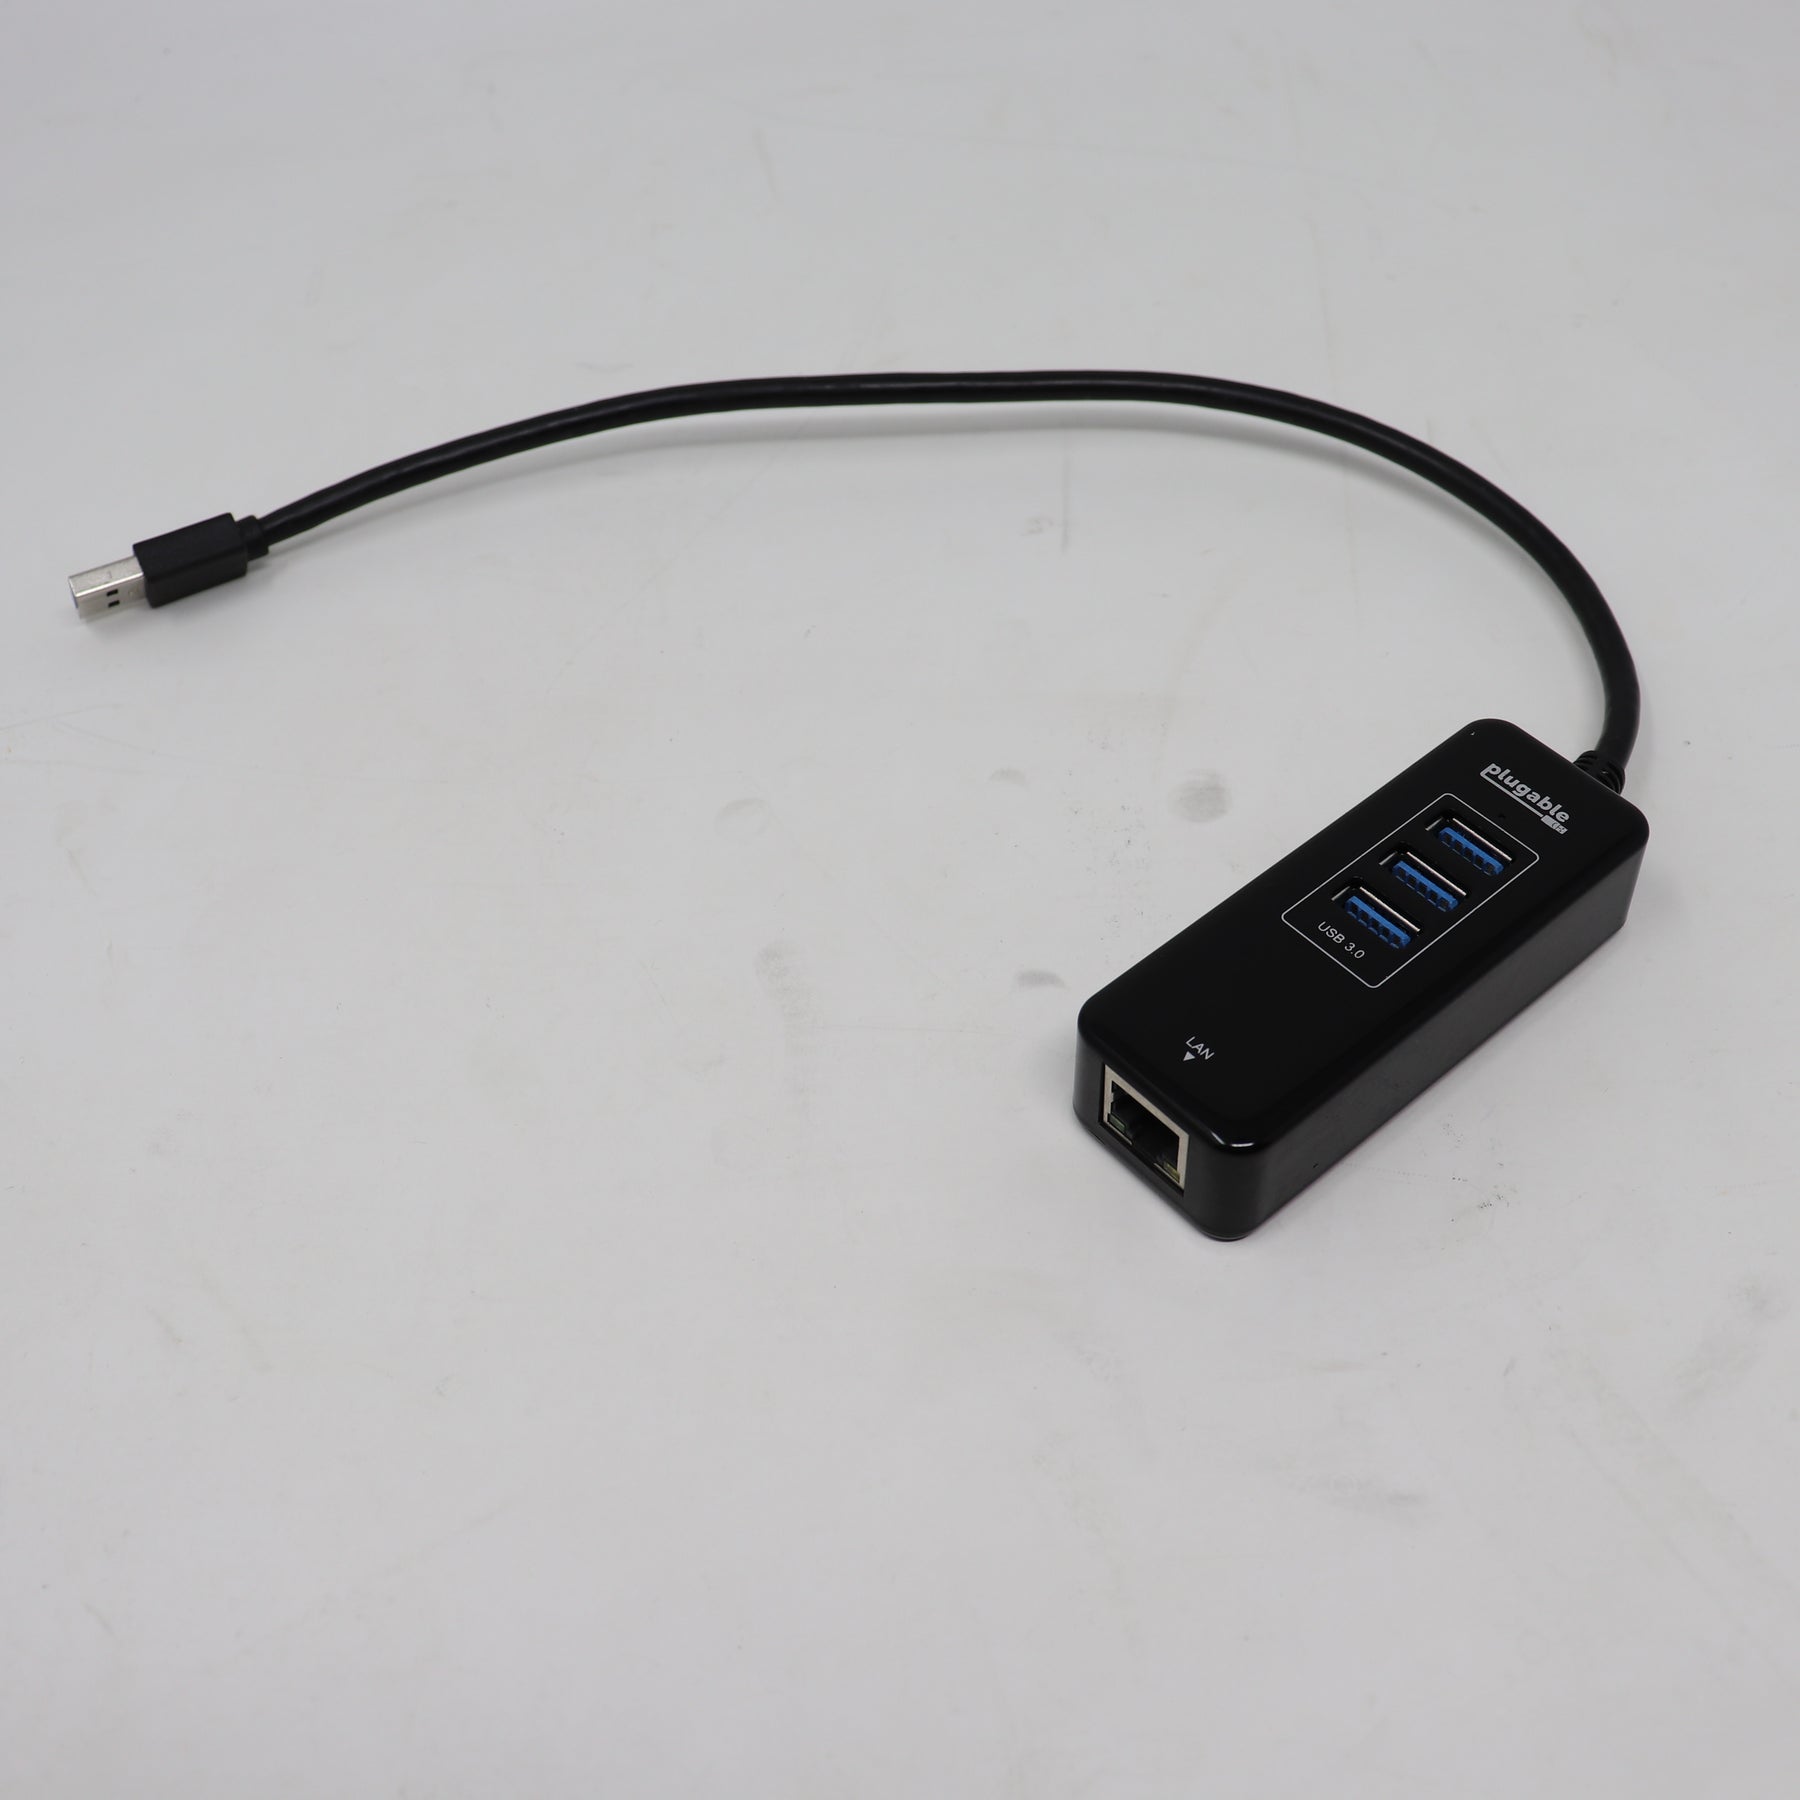 Plugable 3 Port USB 3.0 to Gigabit Ethernet NIC Network Adapter USB3-HUB3ME